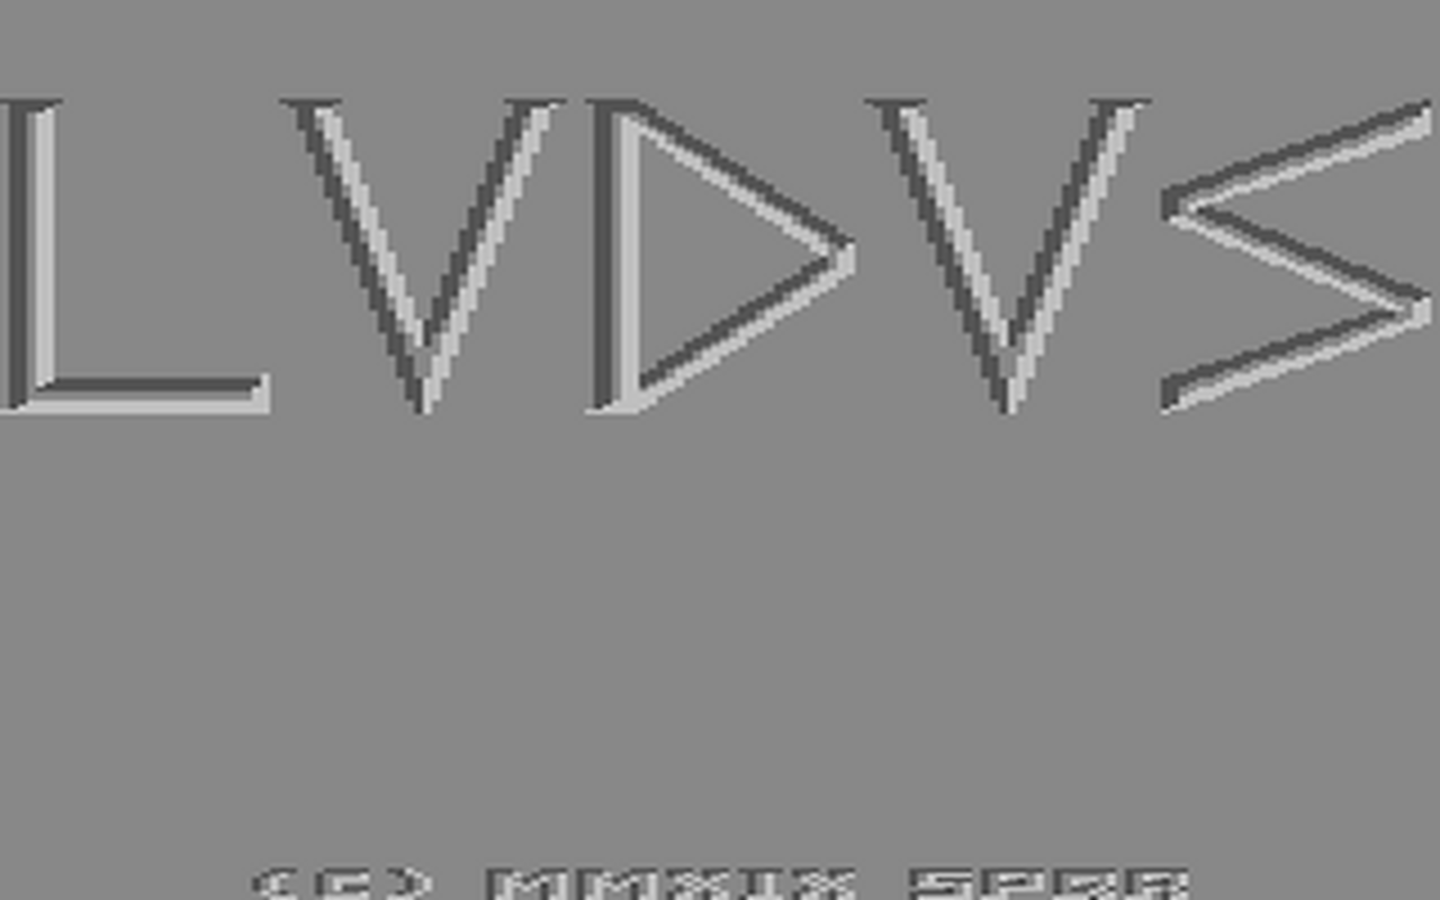 C64 GameBase LVDVS (Public_Domain) 2019